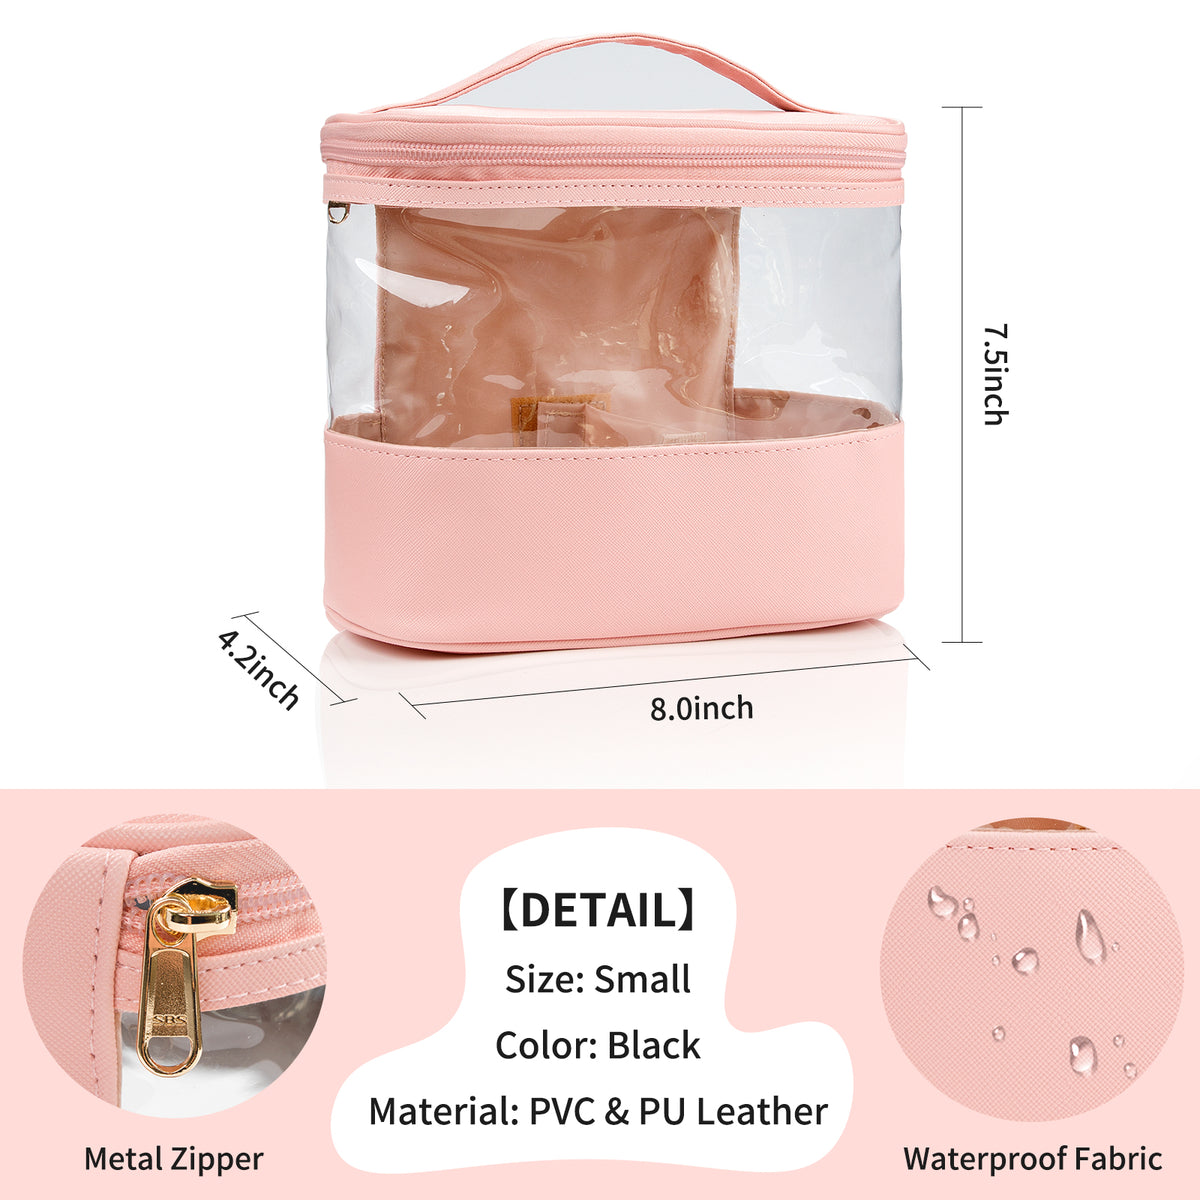  Cosmetic Travel Bag - Clear Vinyl Zipper Toiletry